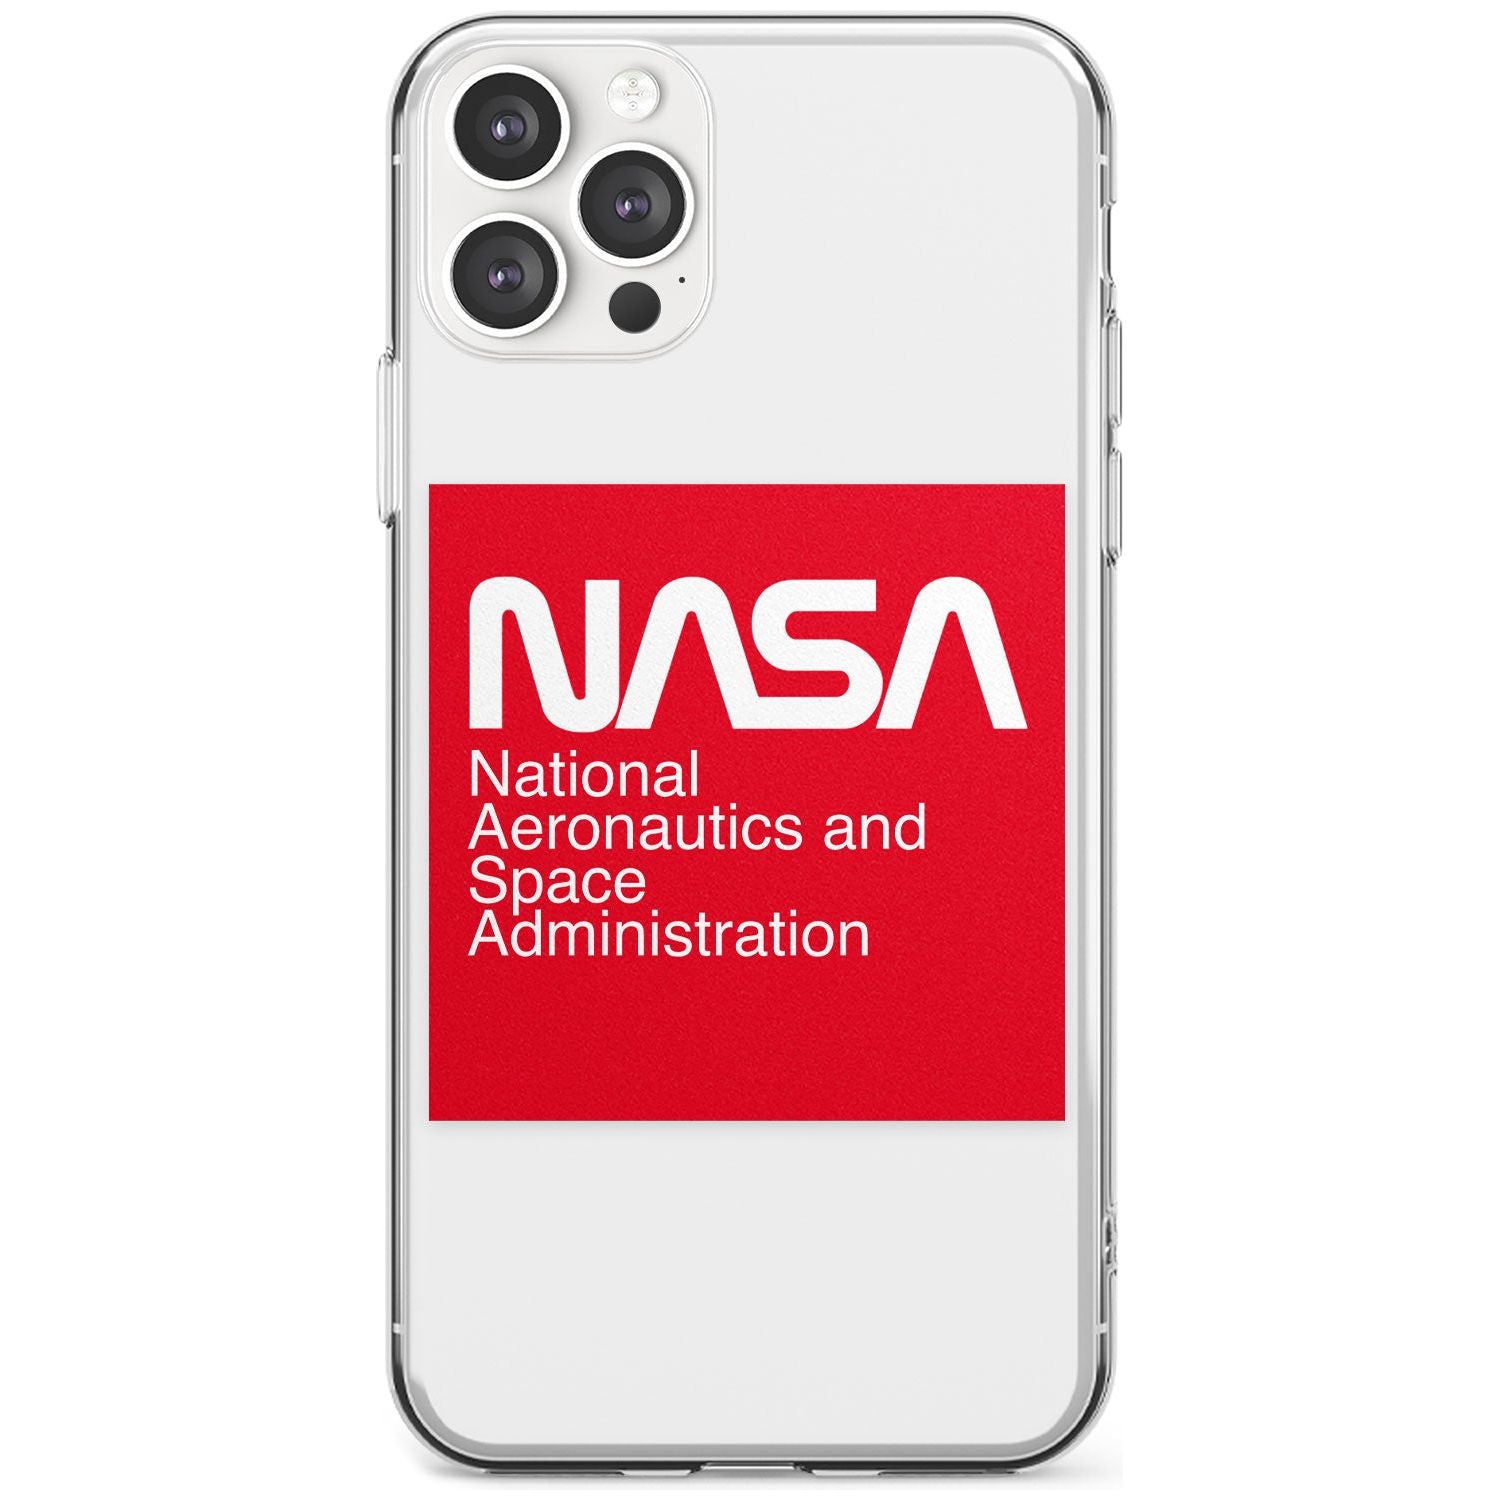 NASA The Worm Box Slim TPU Phone Case for iPhone 11 Pro Max